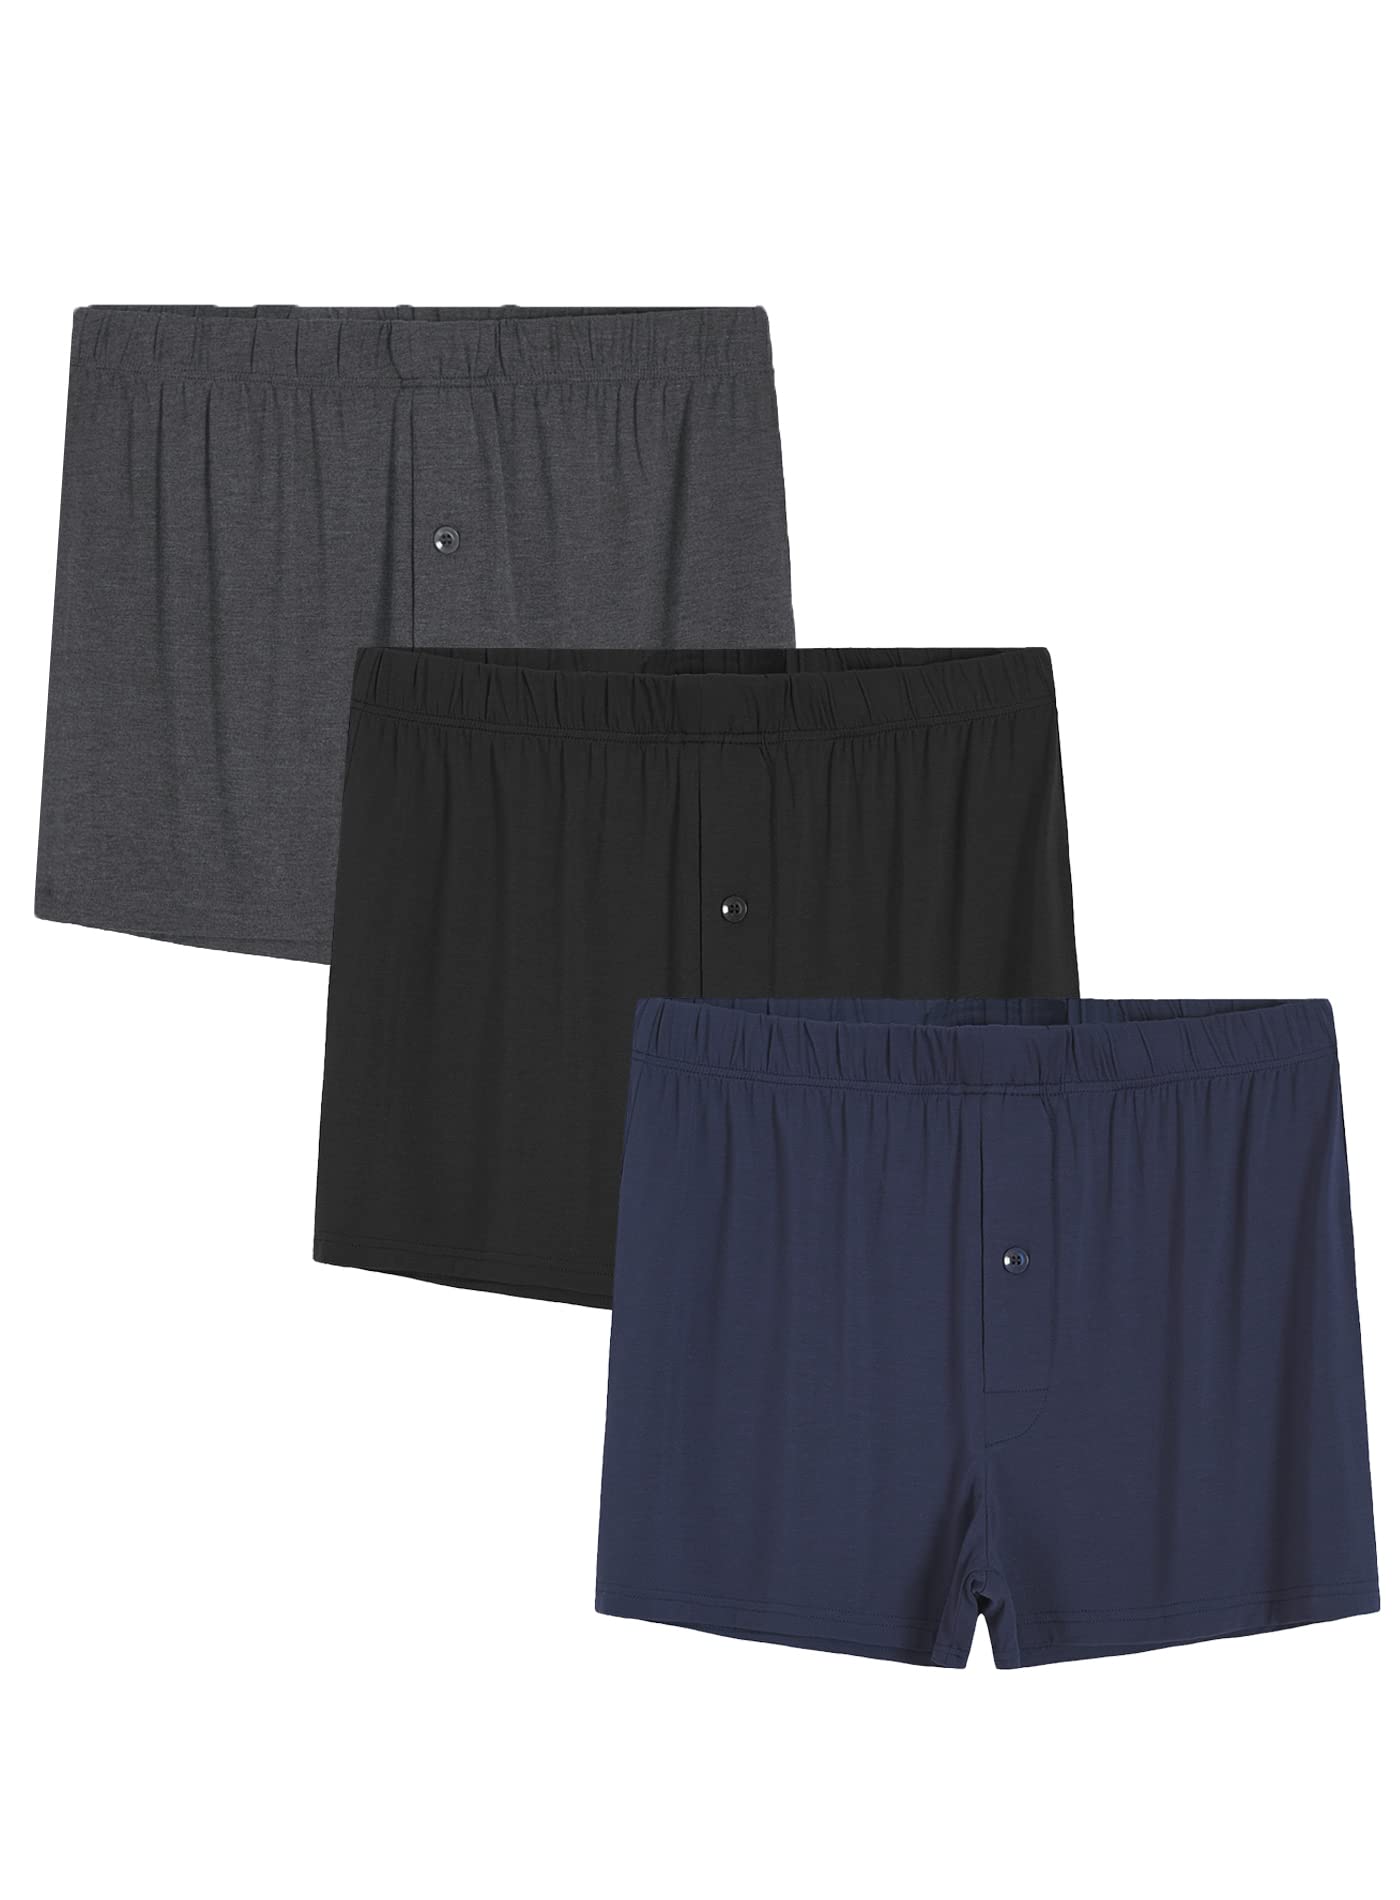 Men's Bamboo Viscose Underwear Boxer Shorts Trunk Briefs 3 Pack – Latuza